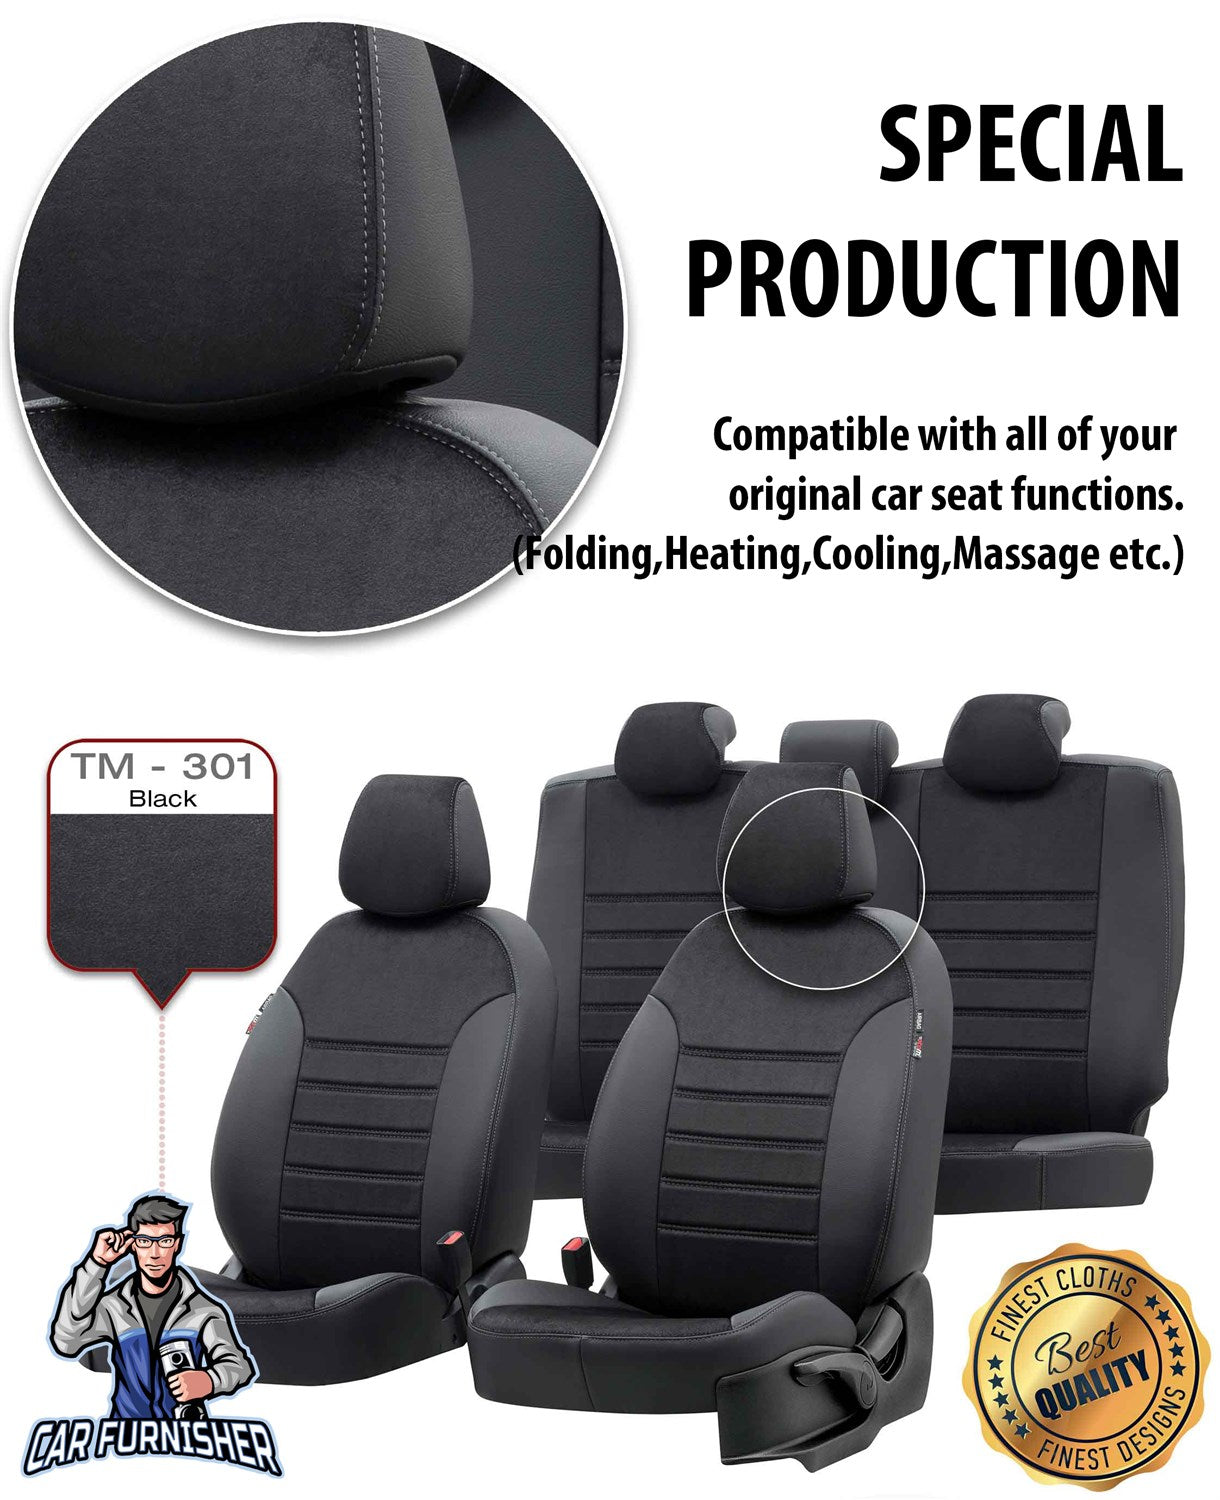 Daihatsu Materia Seat Covers Milano Suede Design Smoked Black Leather & Suede Fabric